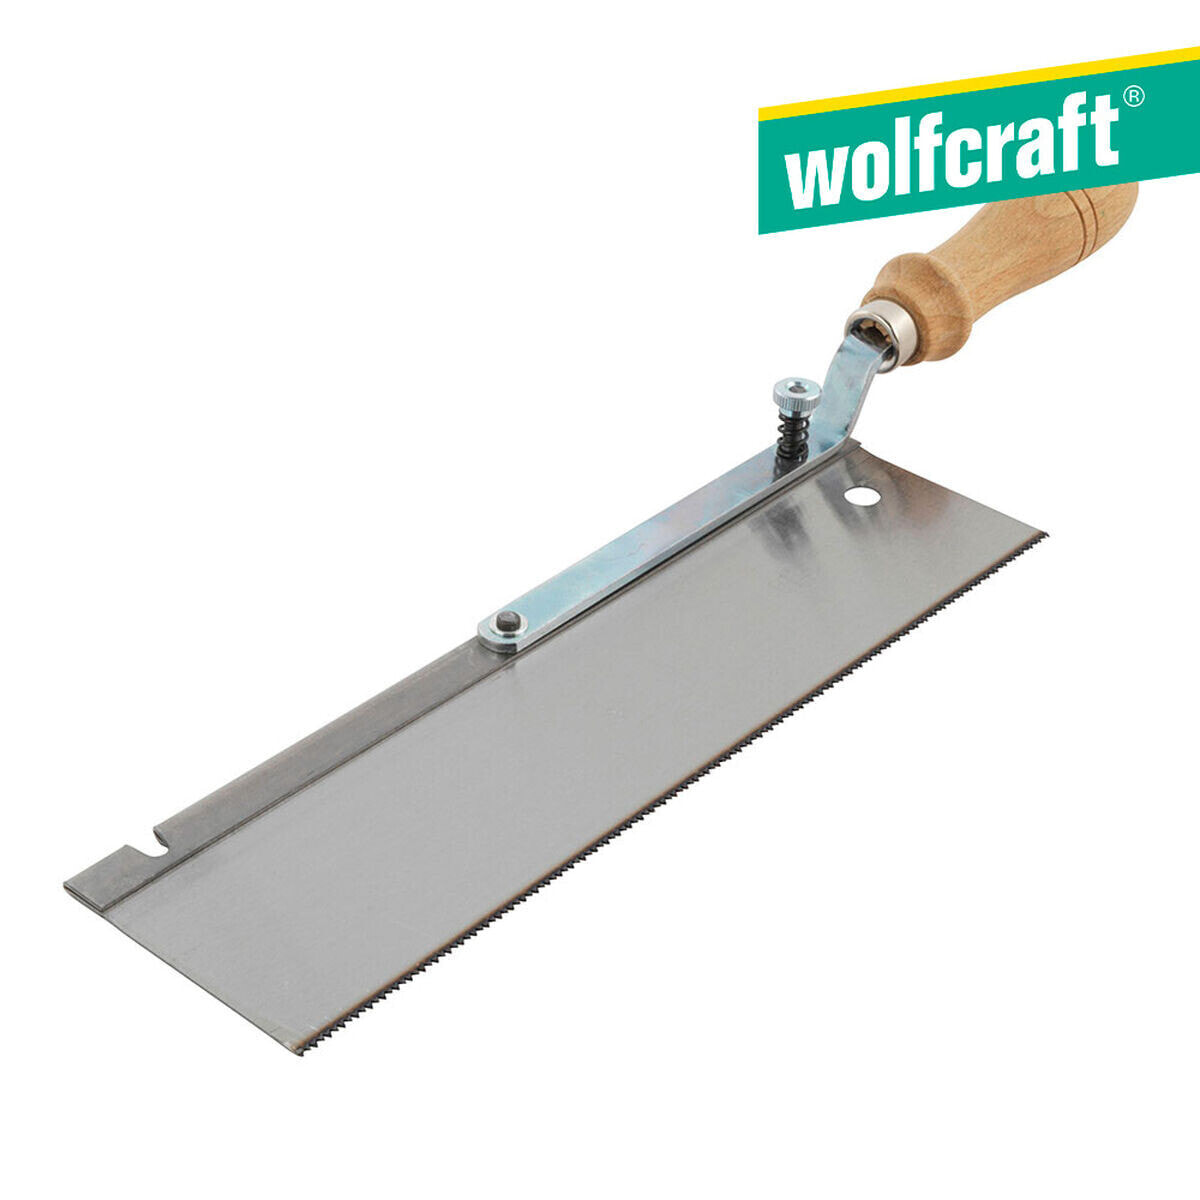 Saw Wolfcraft 6925000 Elbowed Orientable 39 x 4,5 x 9 cm